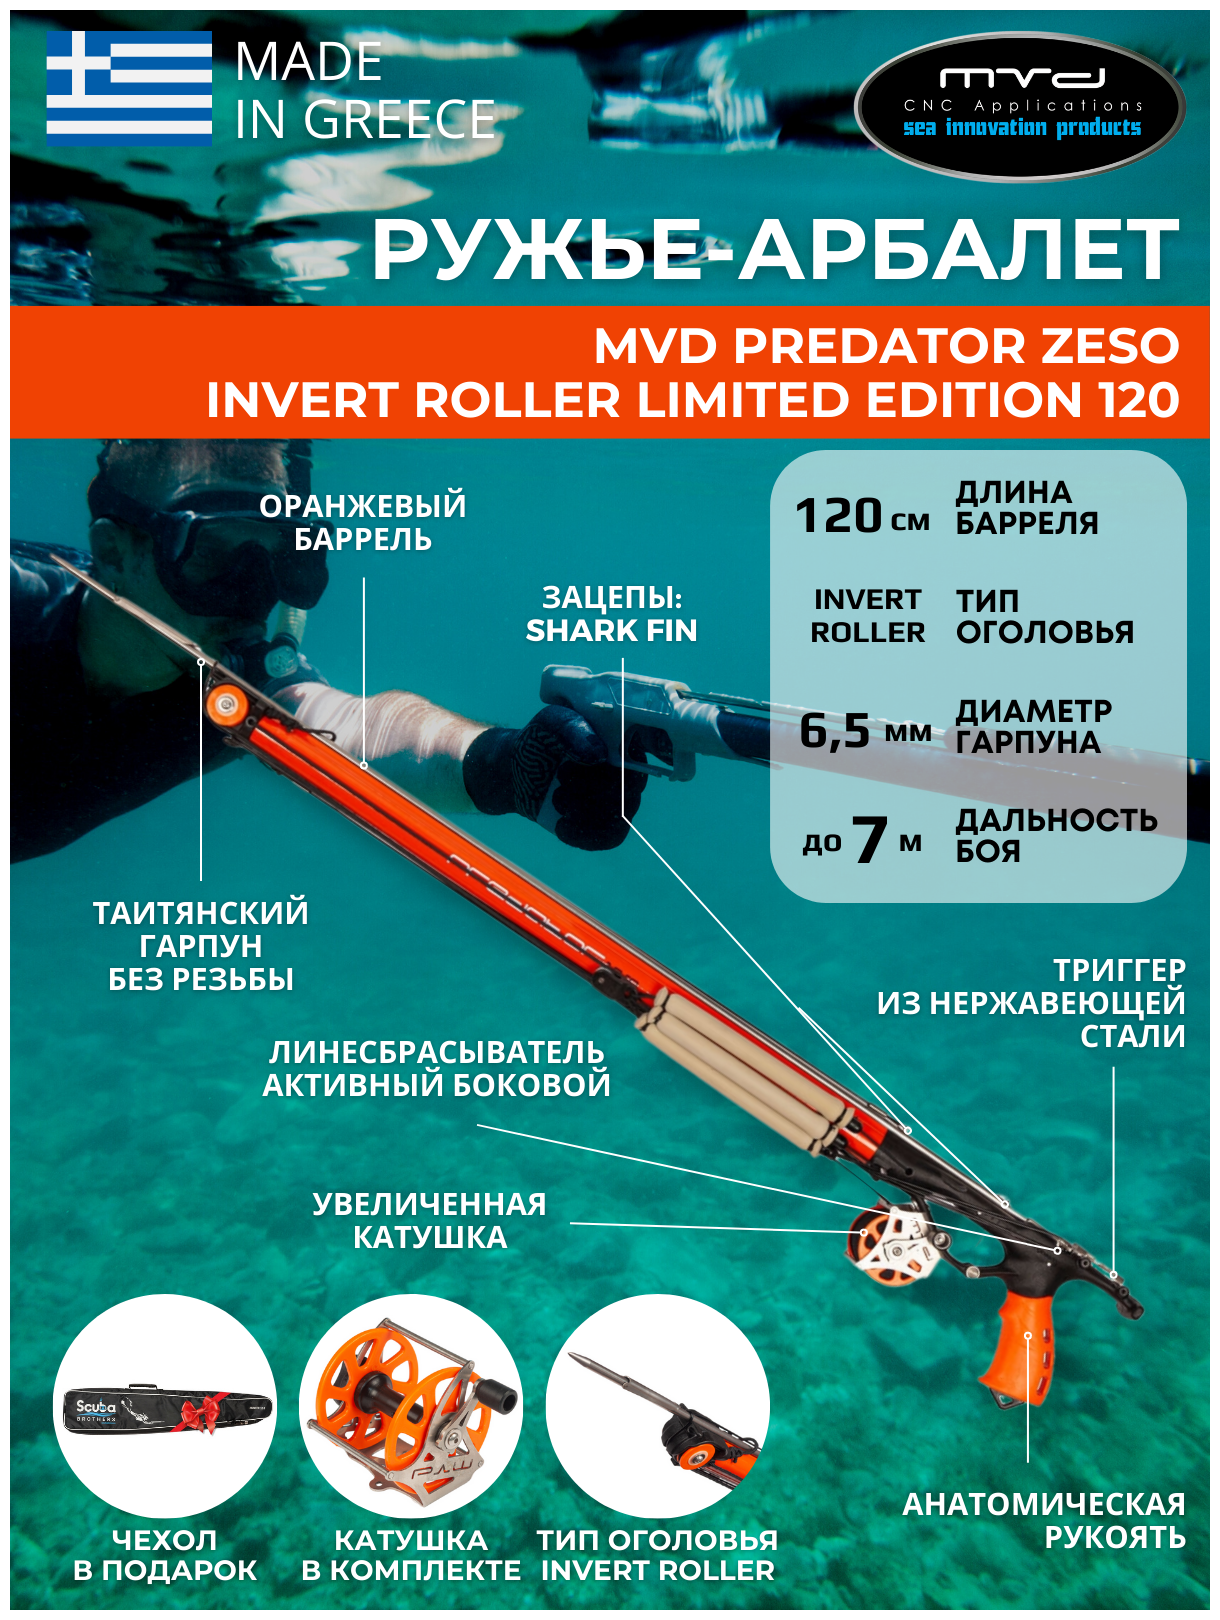 Ружье-арбалет MVD PREDATOR ZESO INVERT ROLLER 120 см Limited Edition, с катушкой, полный комплект